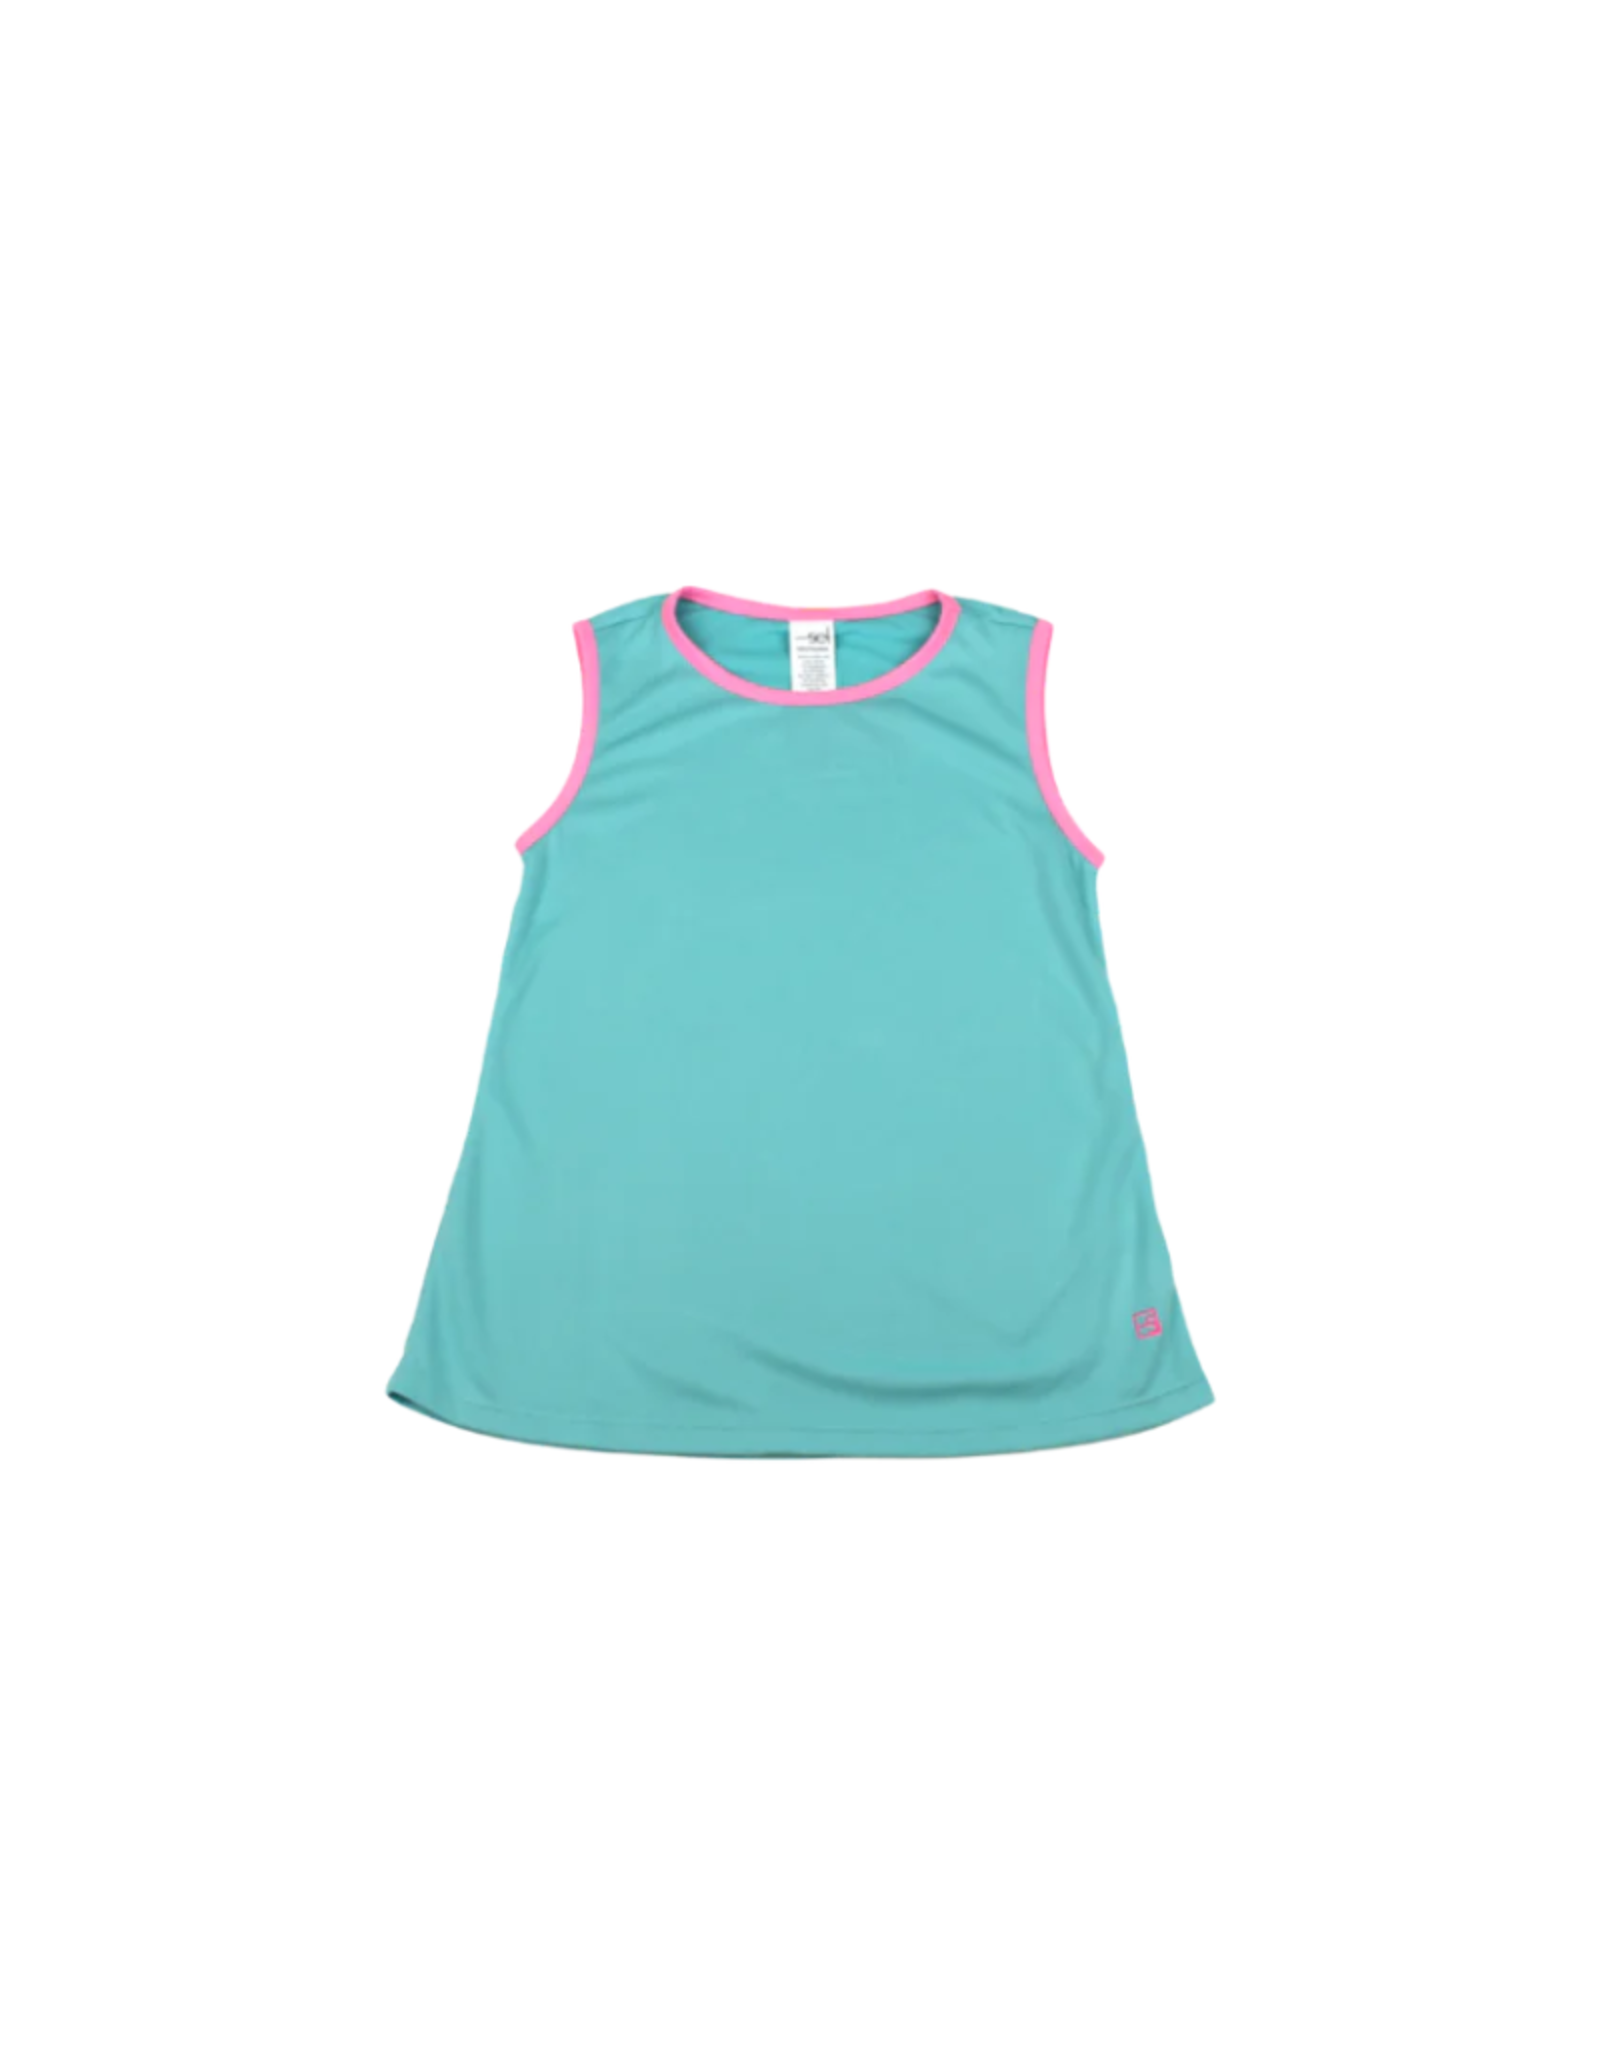 SET Tori Tank - Turquoise with Pink